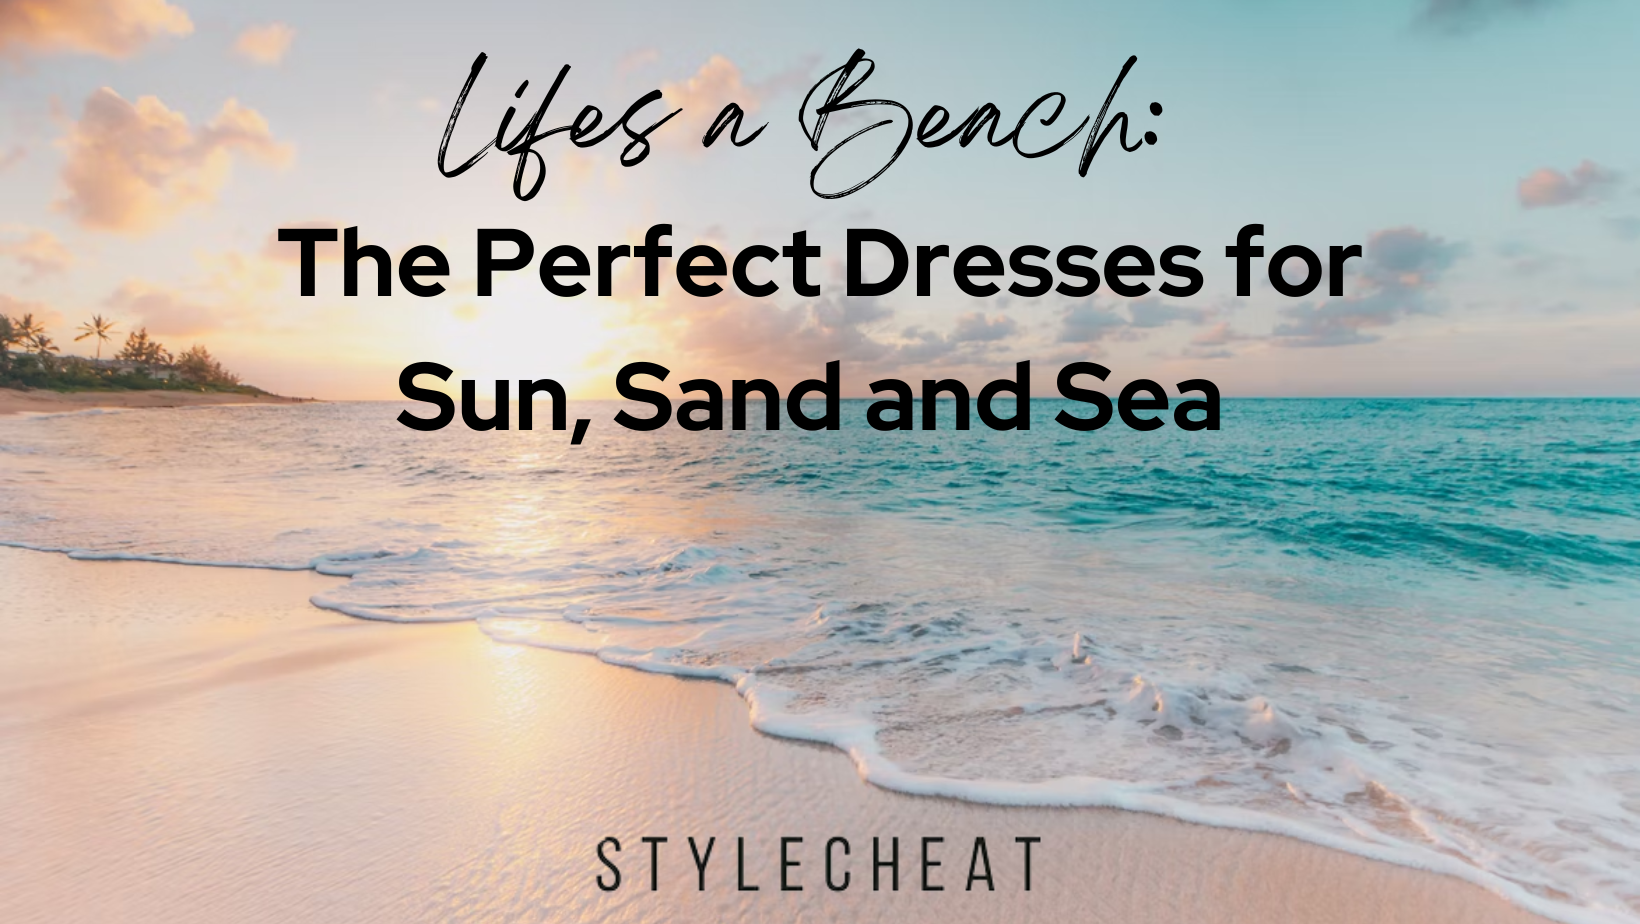 Life’s a Beach: The Perfect Dresses for the Sun, Sand & Sea